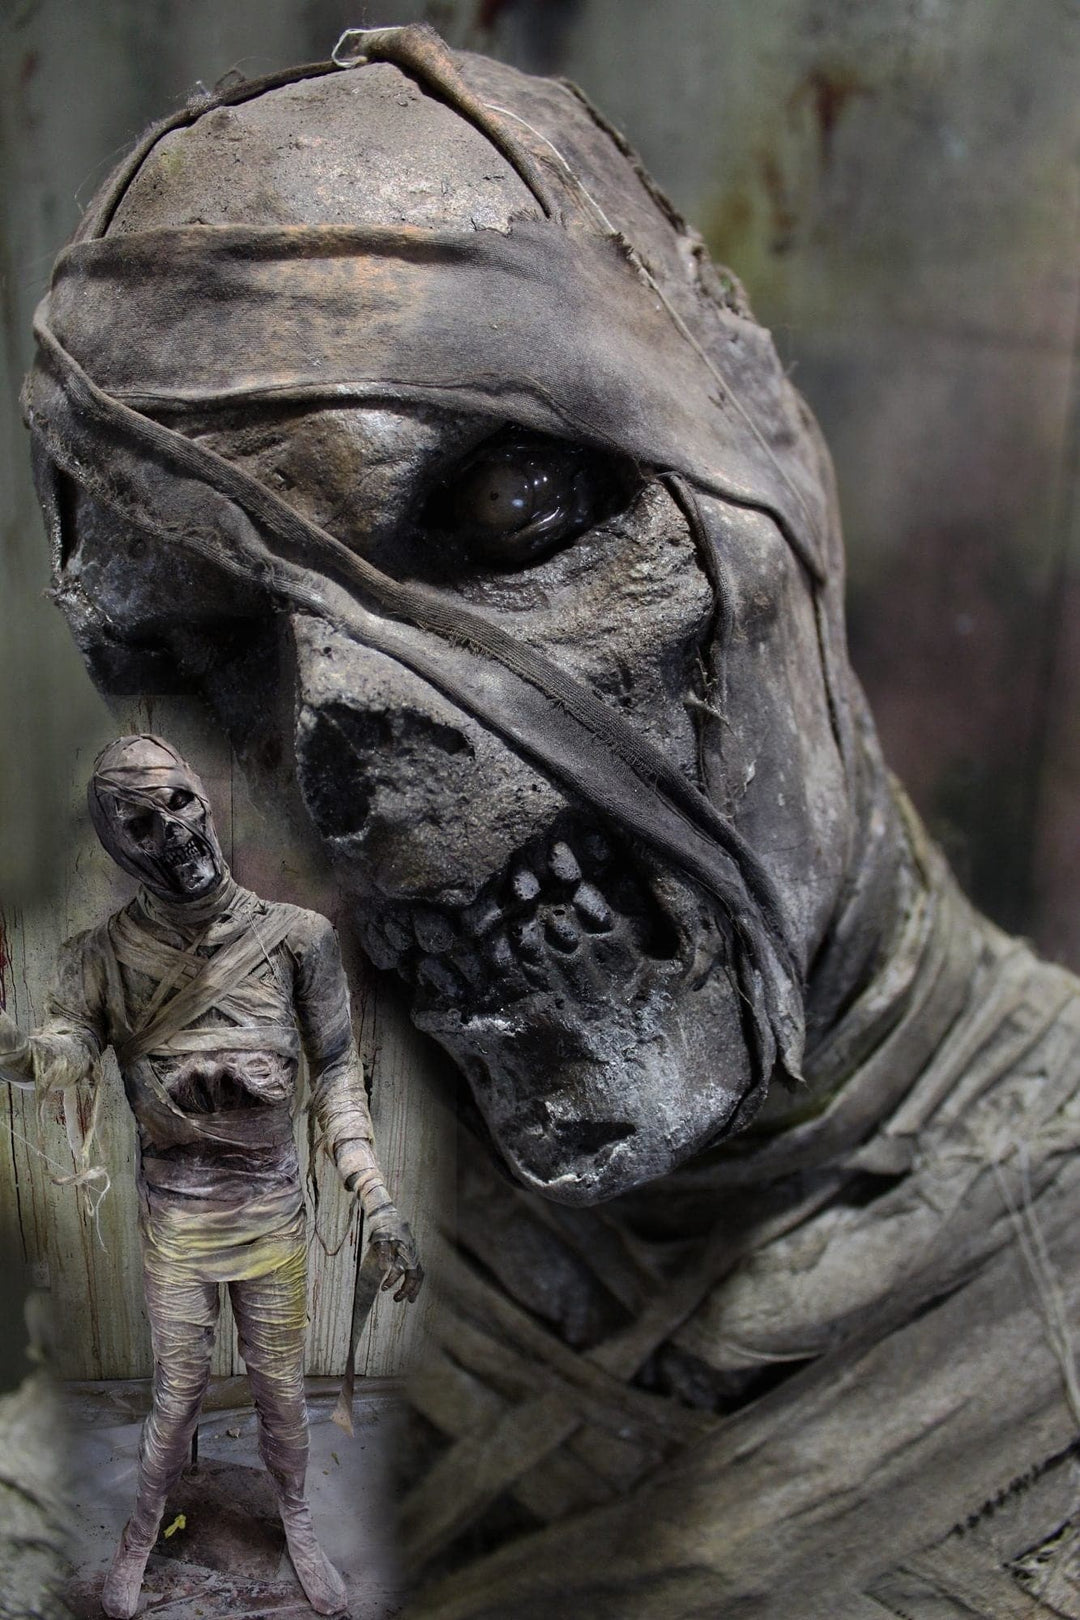 "Old Rotten Mummy" Halloween Monster Prop